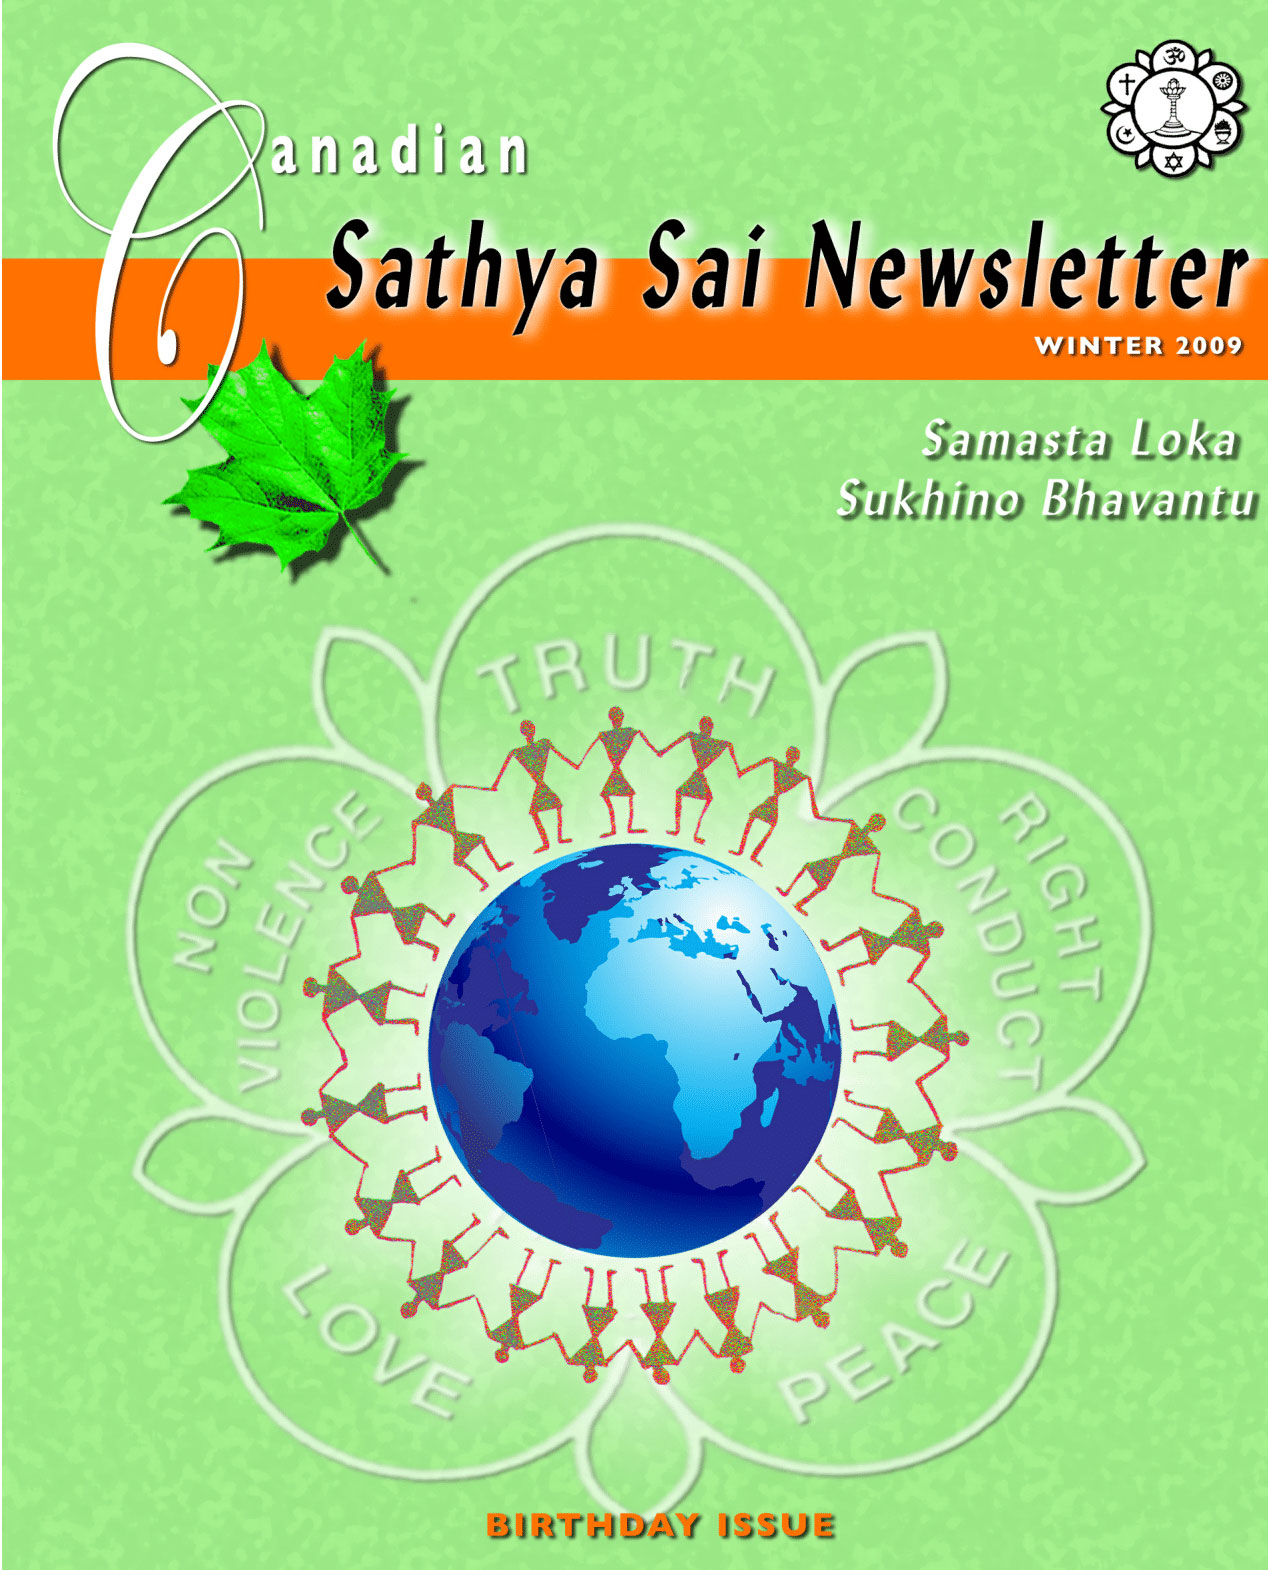 The Canadian Sathya Sai Magazine - Winter 2009